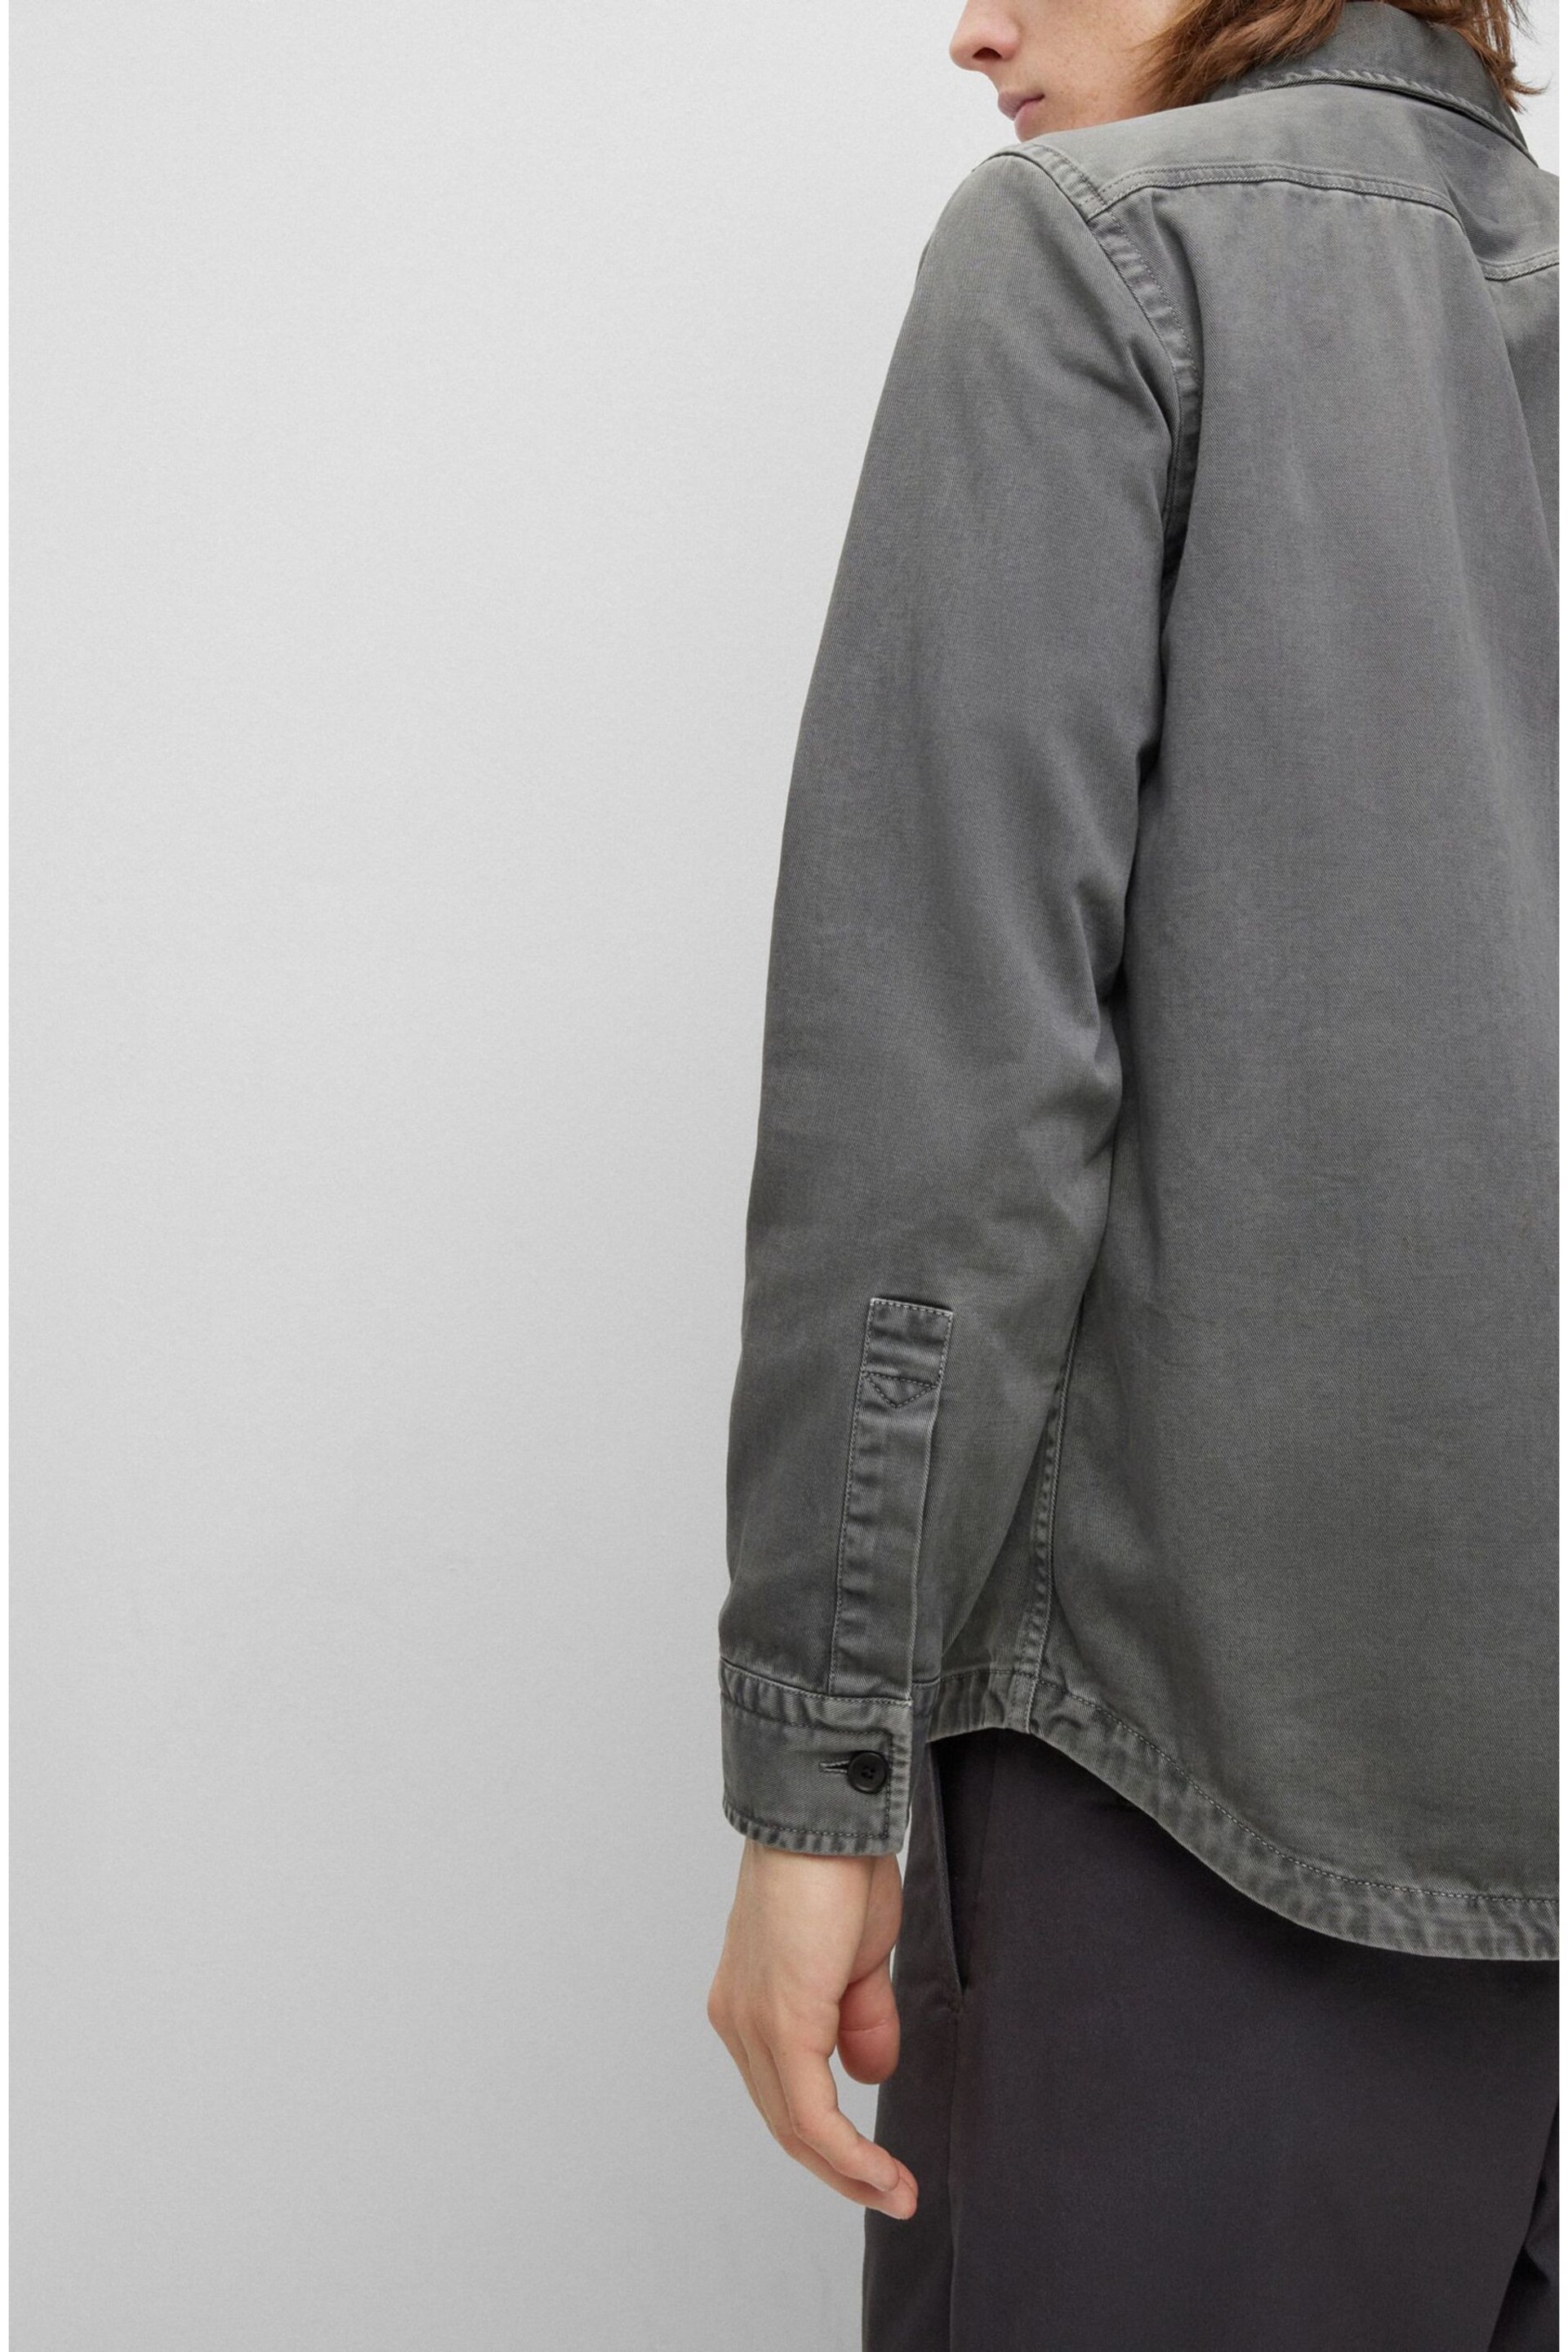 BOSS Grey Garment Dyed Twill Overshirt - Image 5 of 6